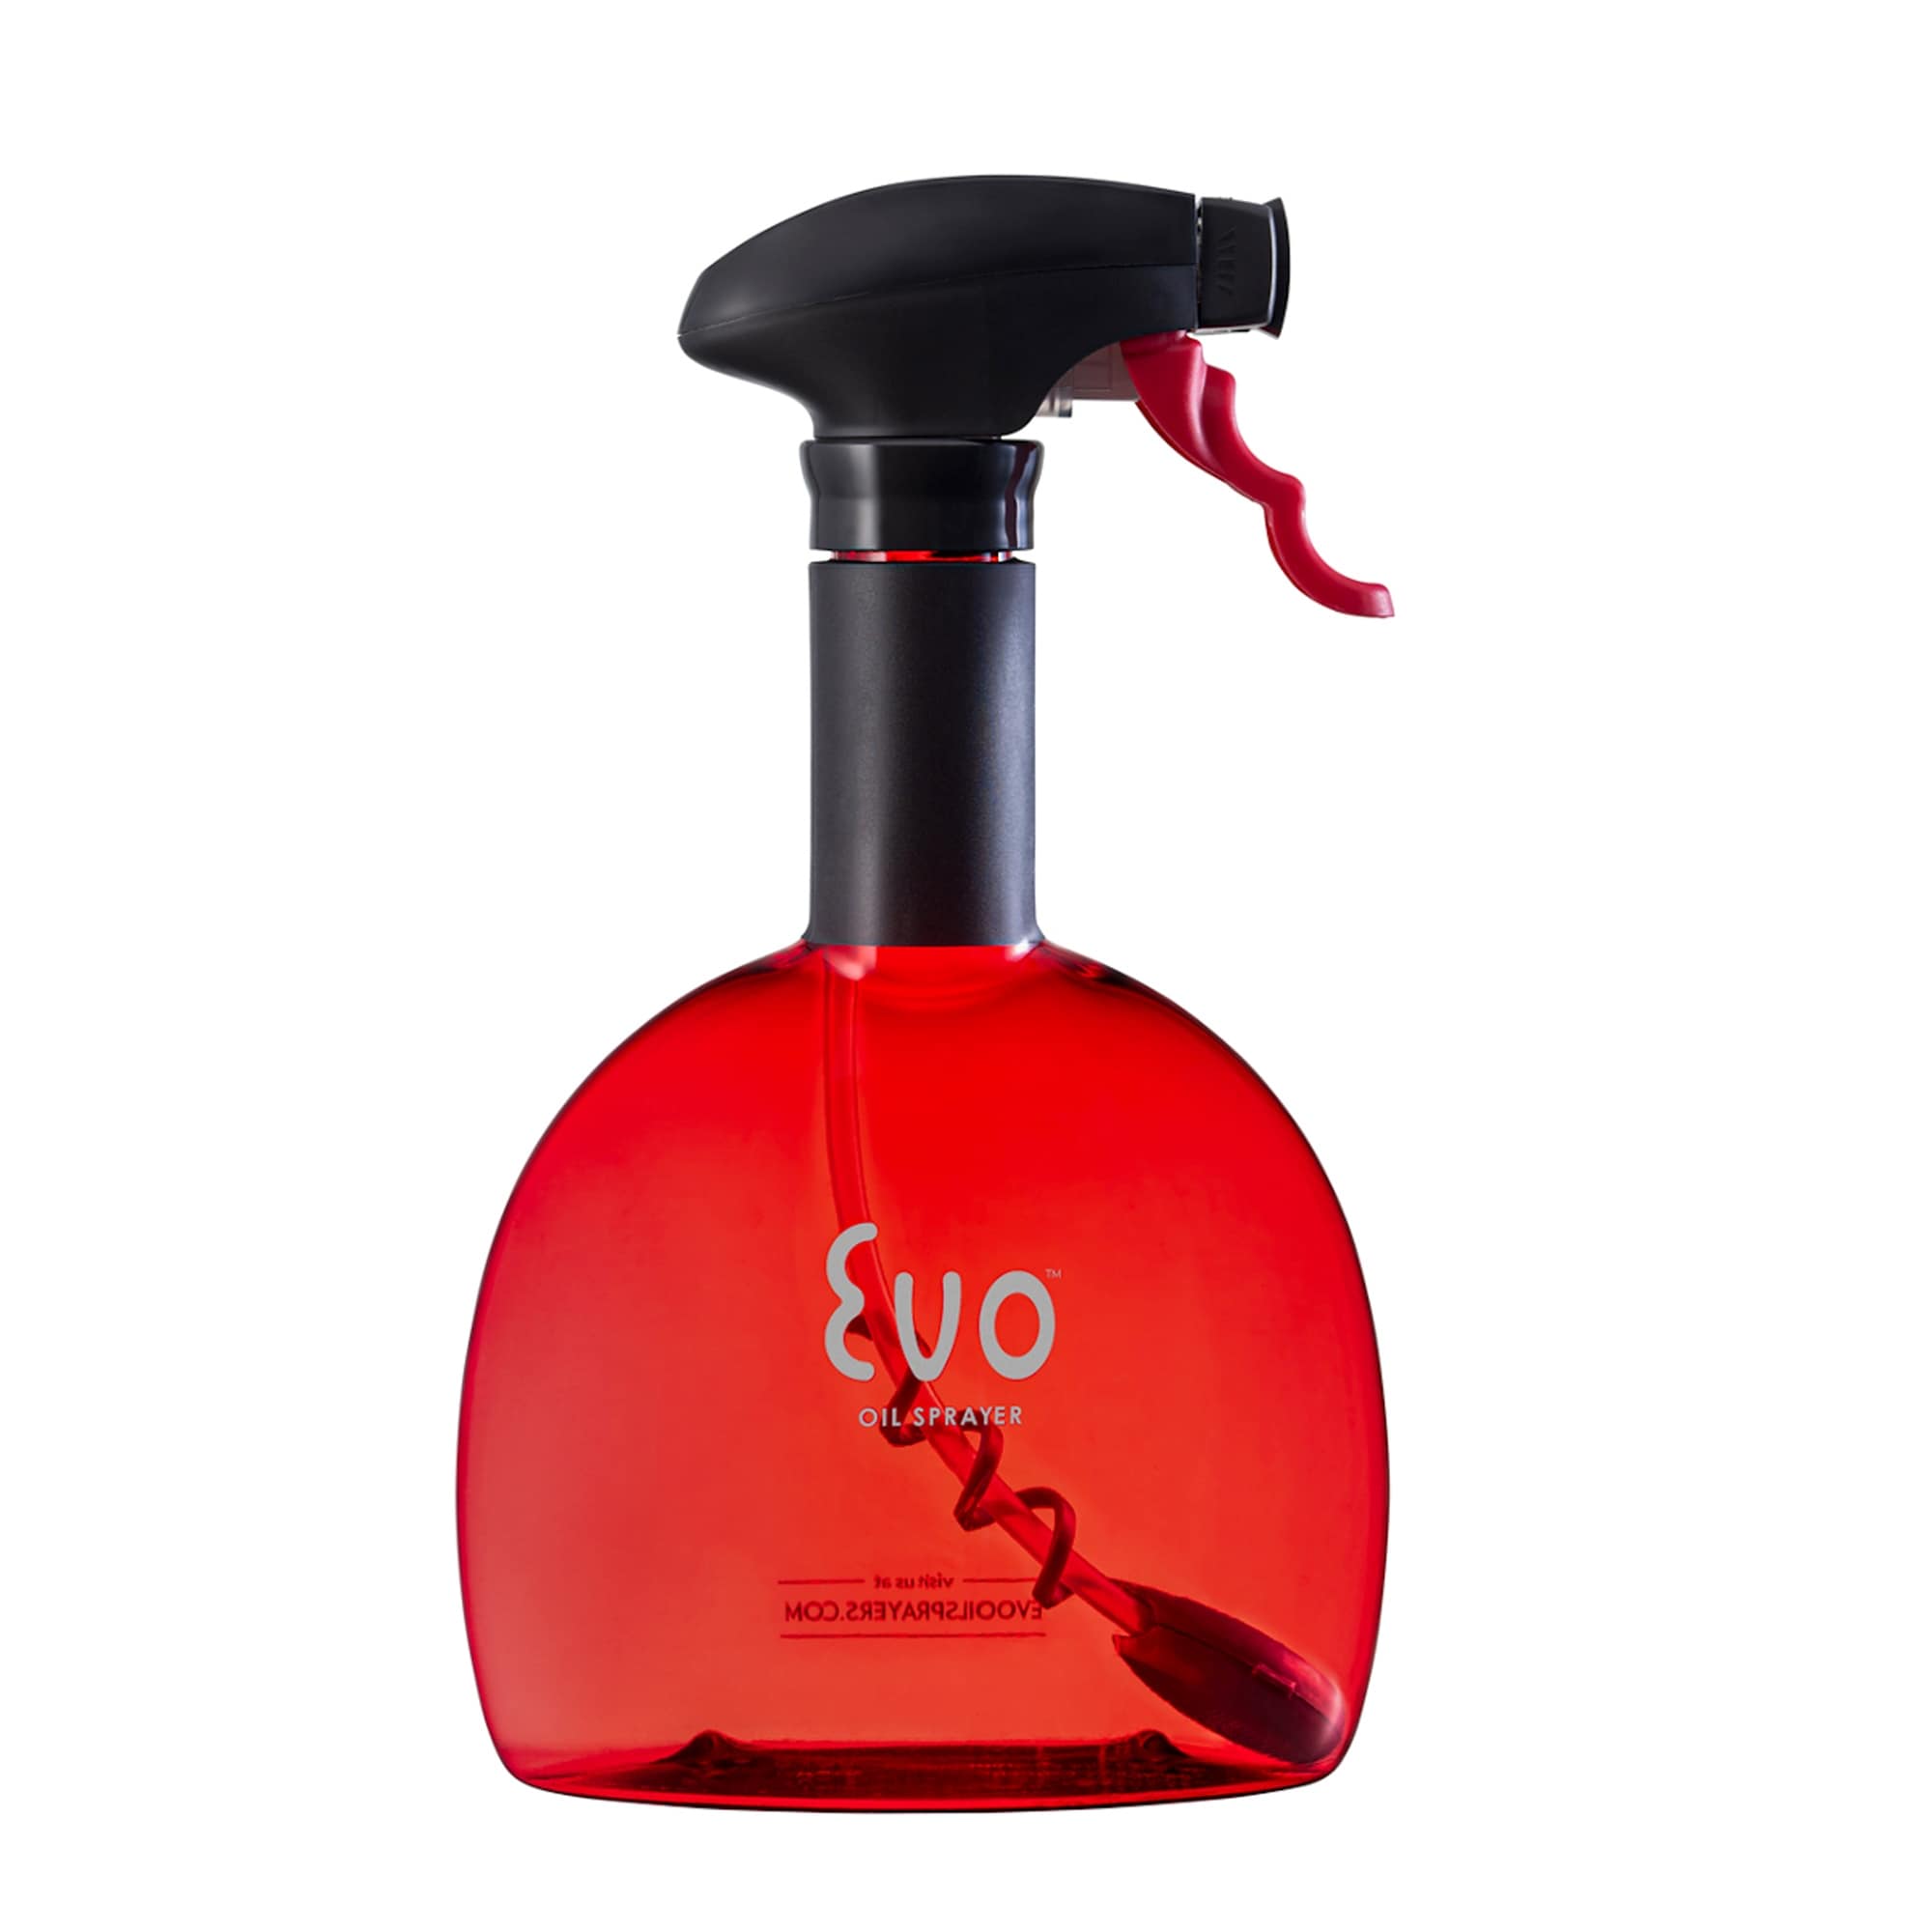 Evo Original Oil Sprayer, 18-Ounce Capacity - Bed Bath & Beyond - 39497745